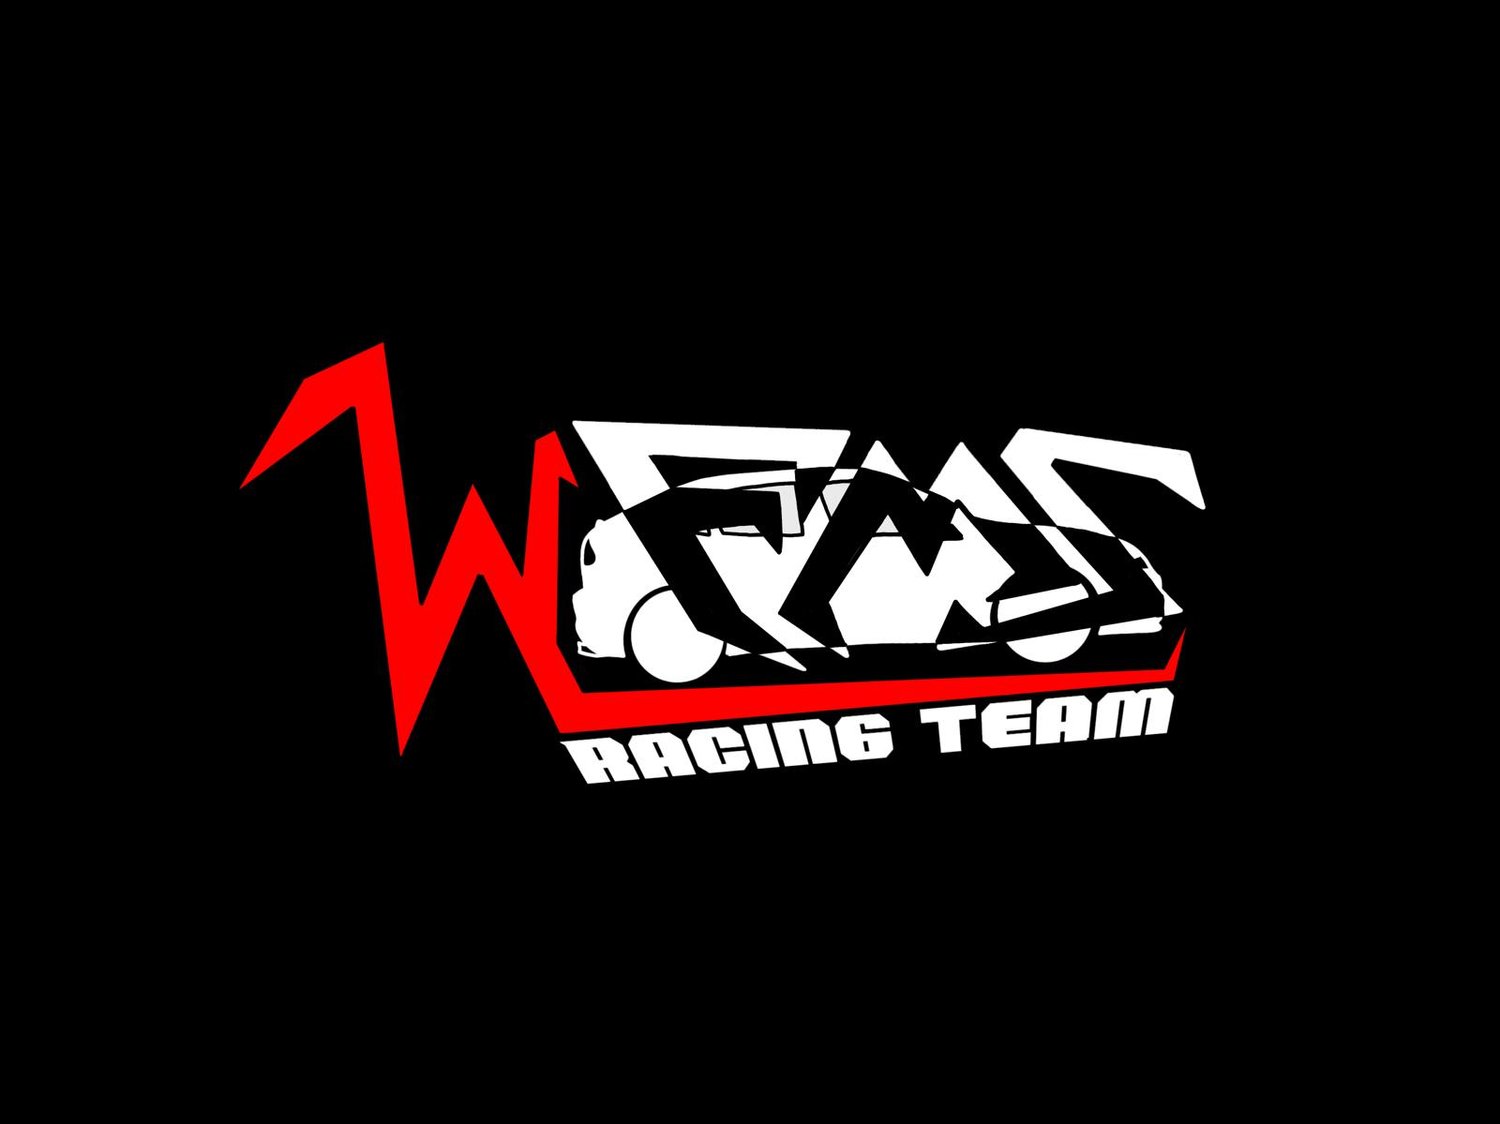 WFMS Racing Team